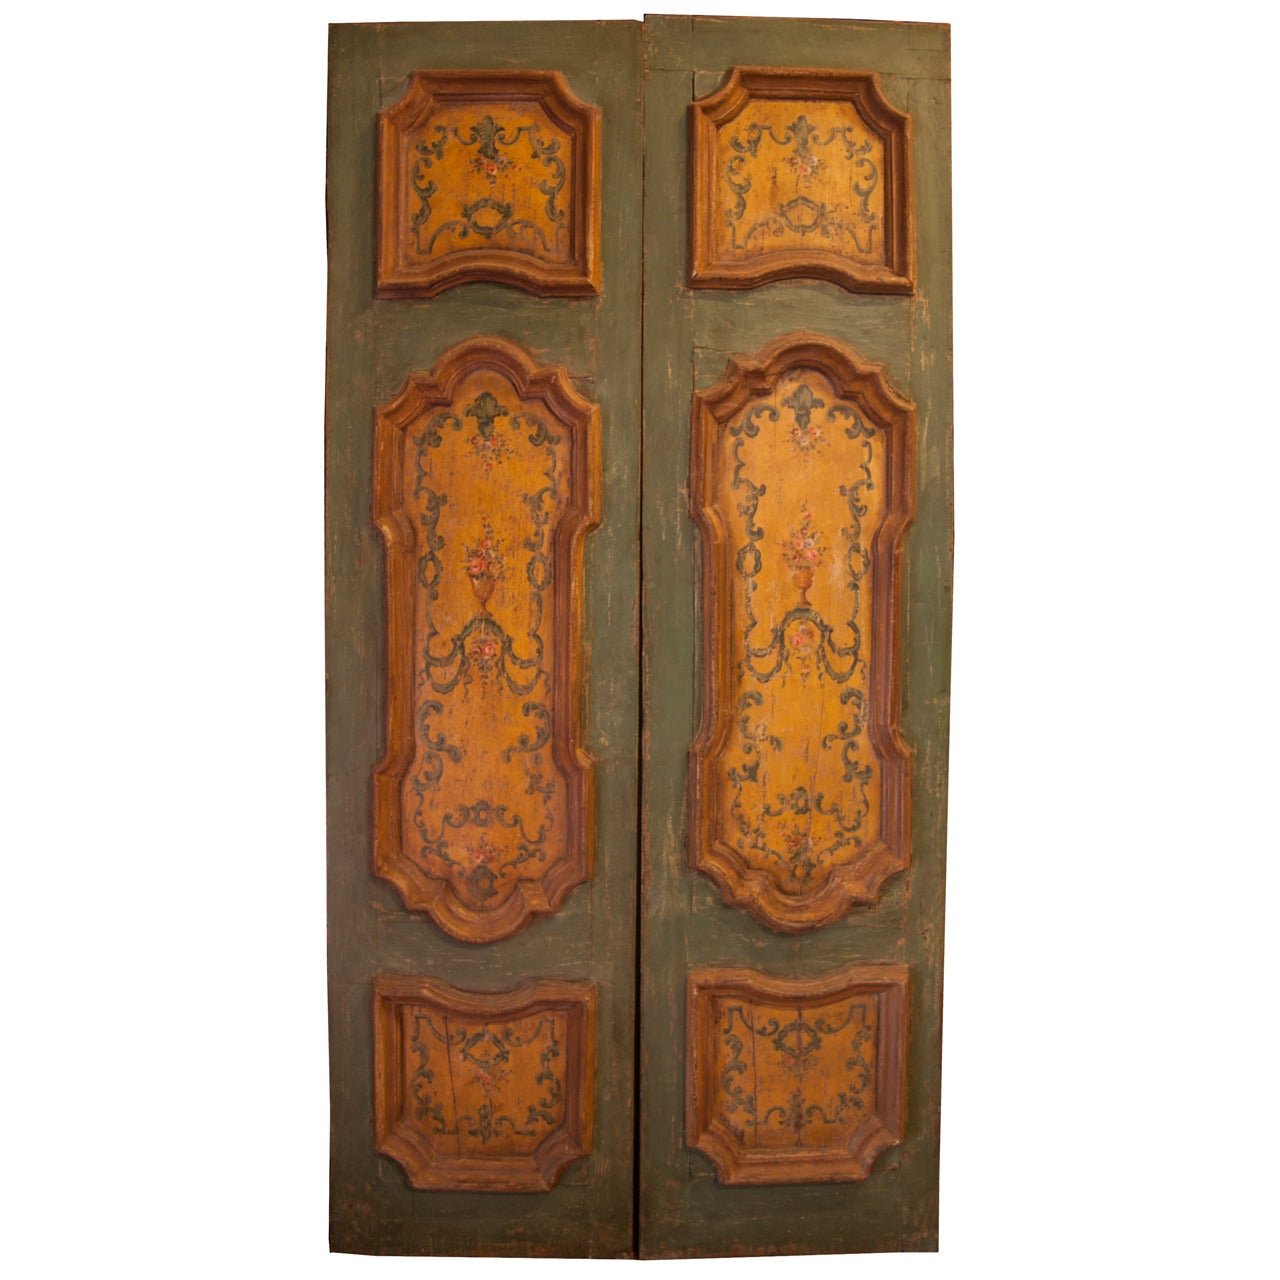 Antique lacquered Double Door